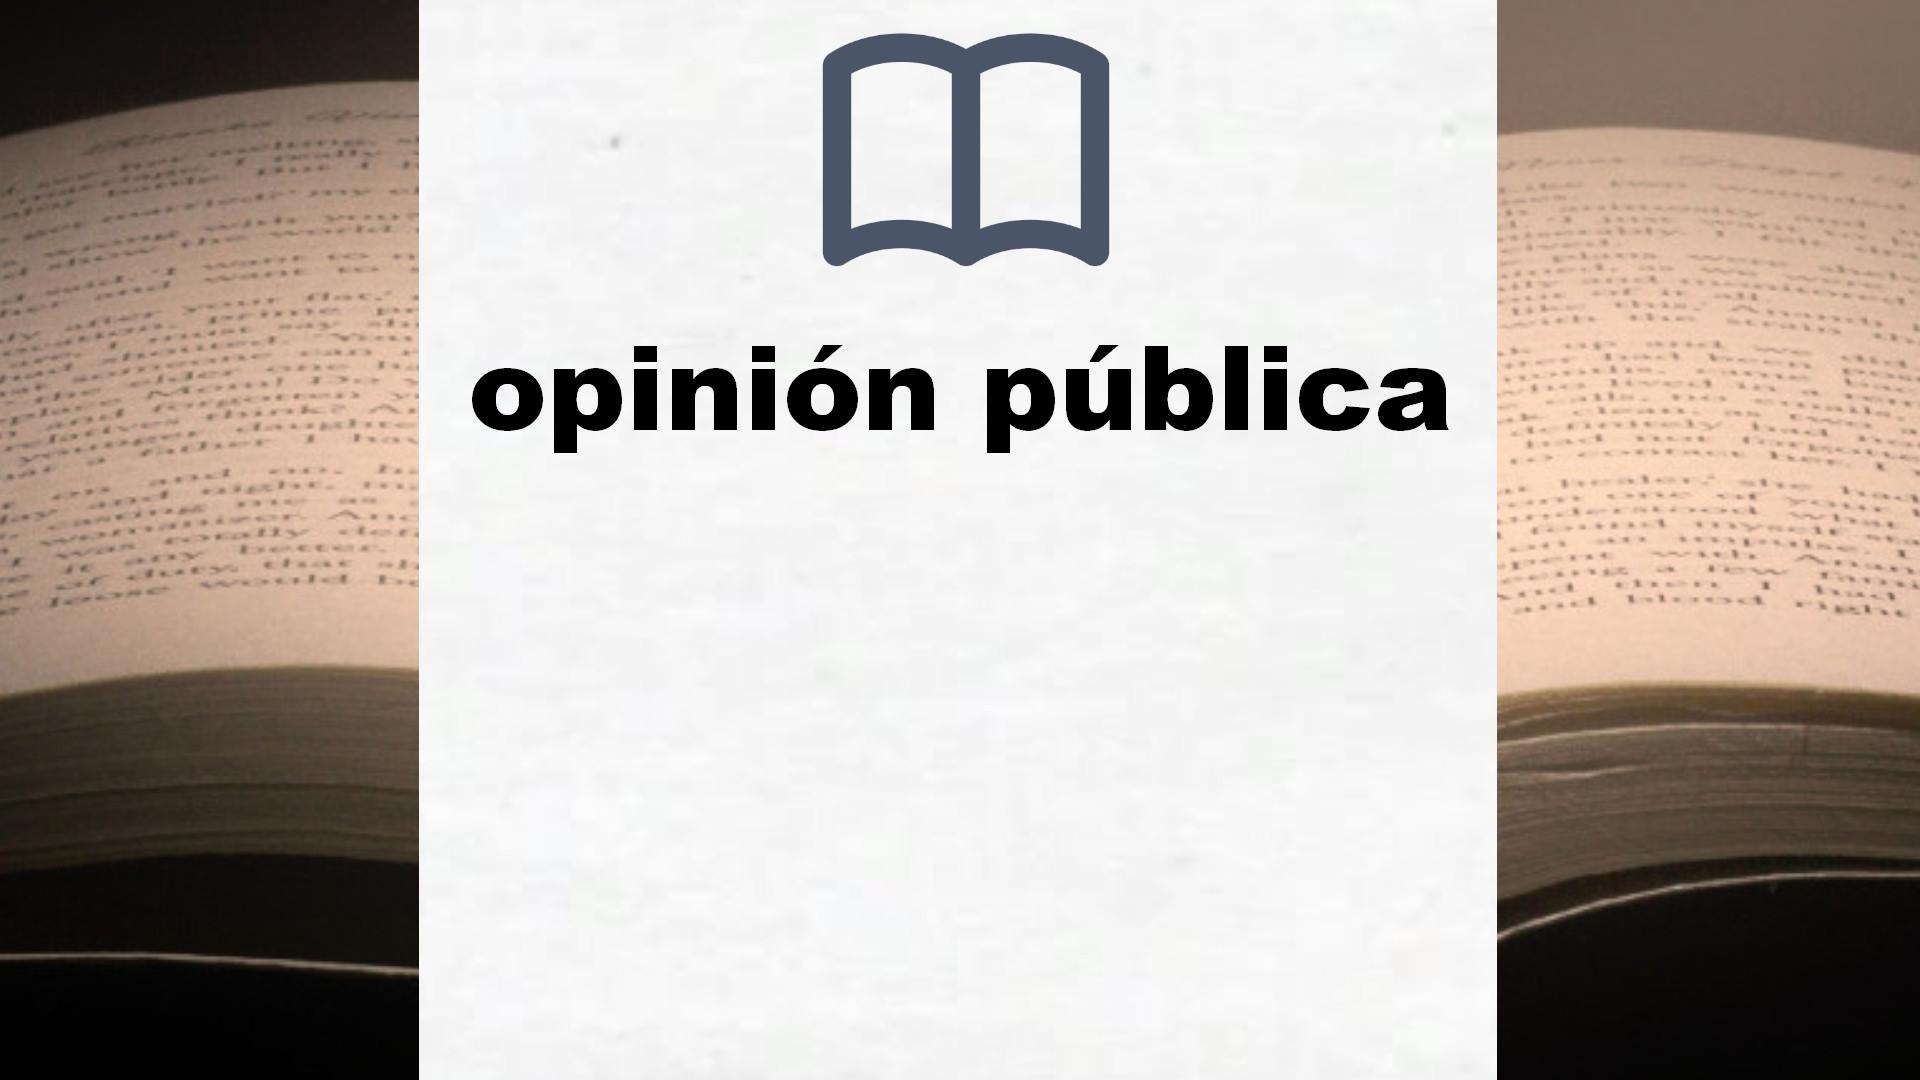 Libros sobre opinión pública